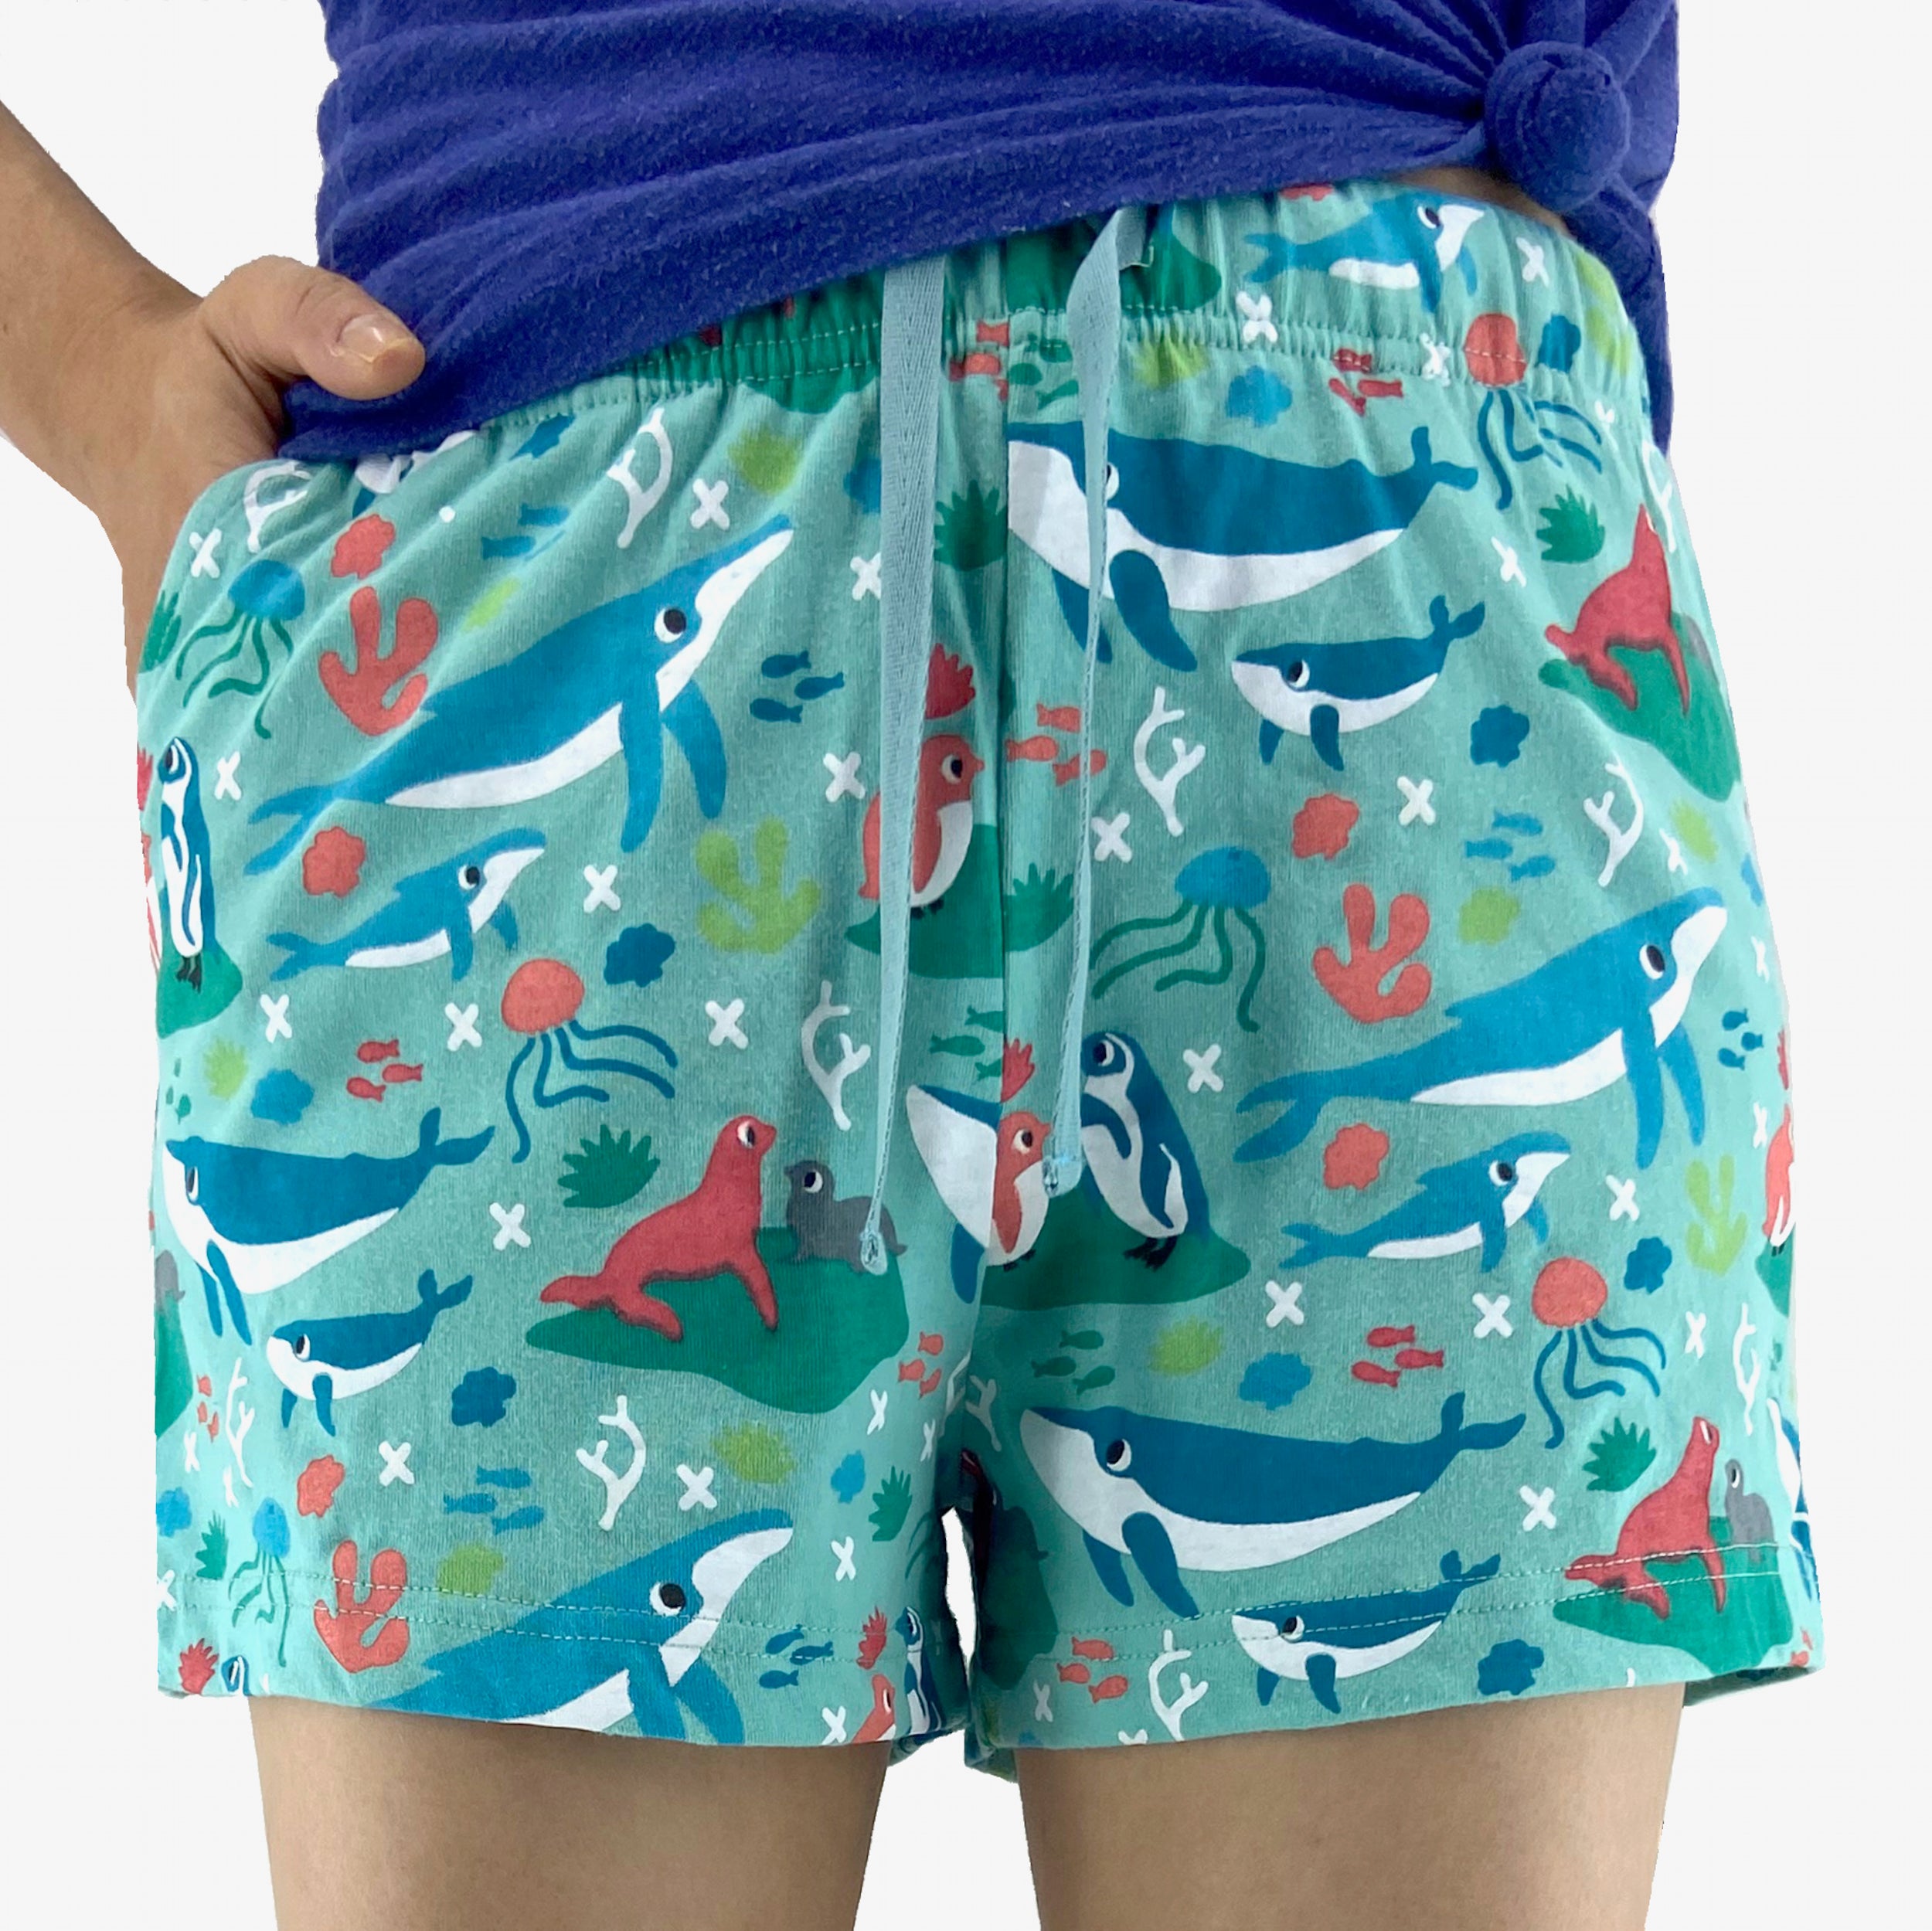 Women's Blue Ocean Sea Creatures Whale Patterned Cotton Pajama Shorts